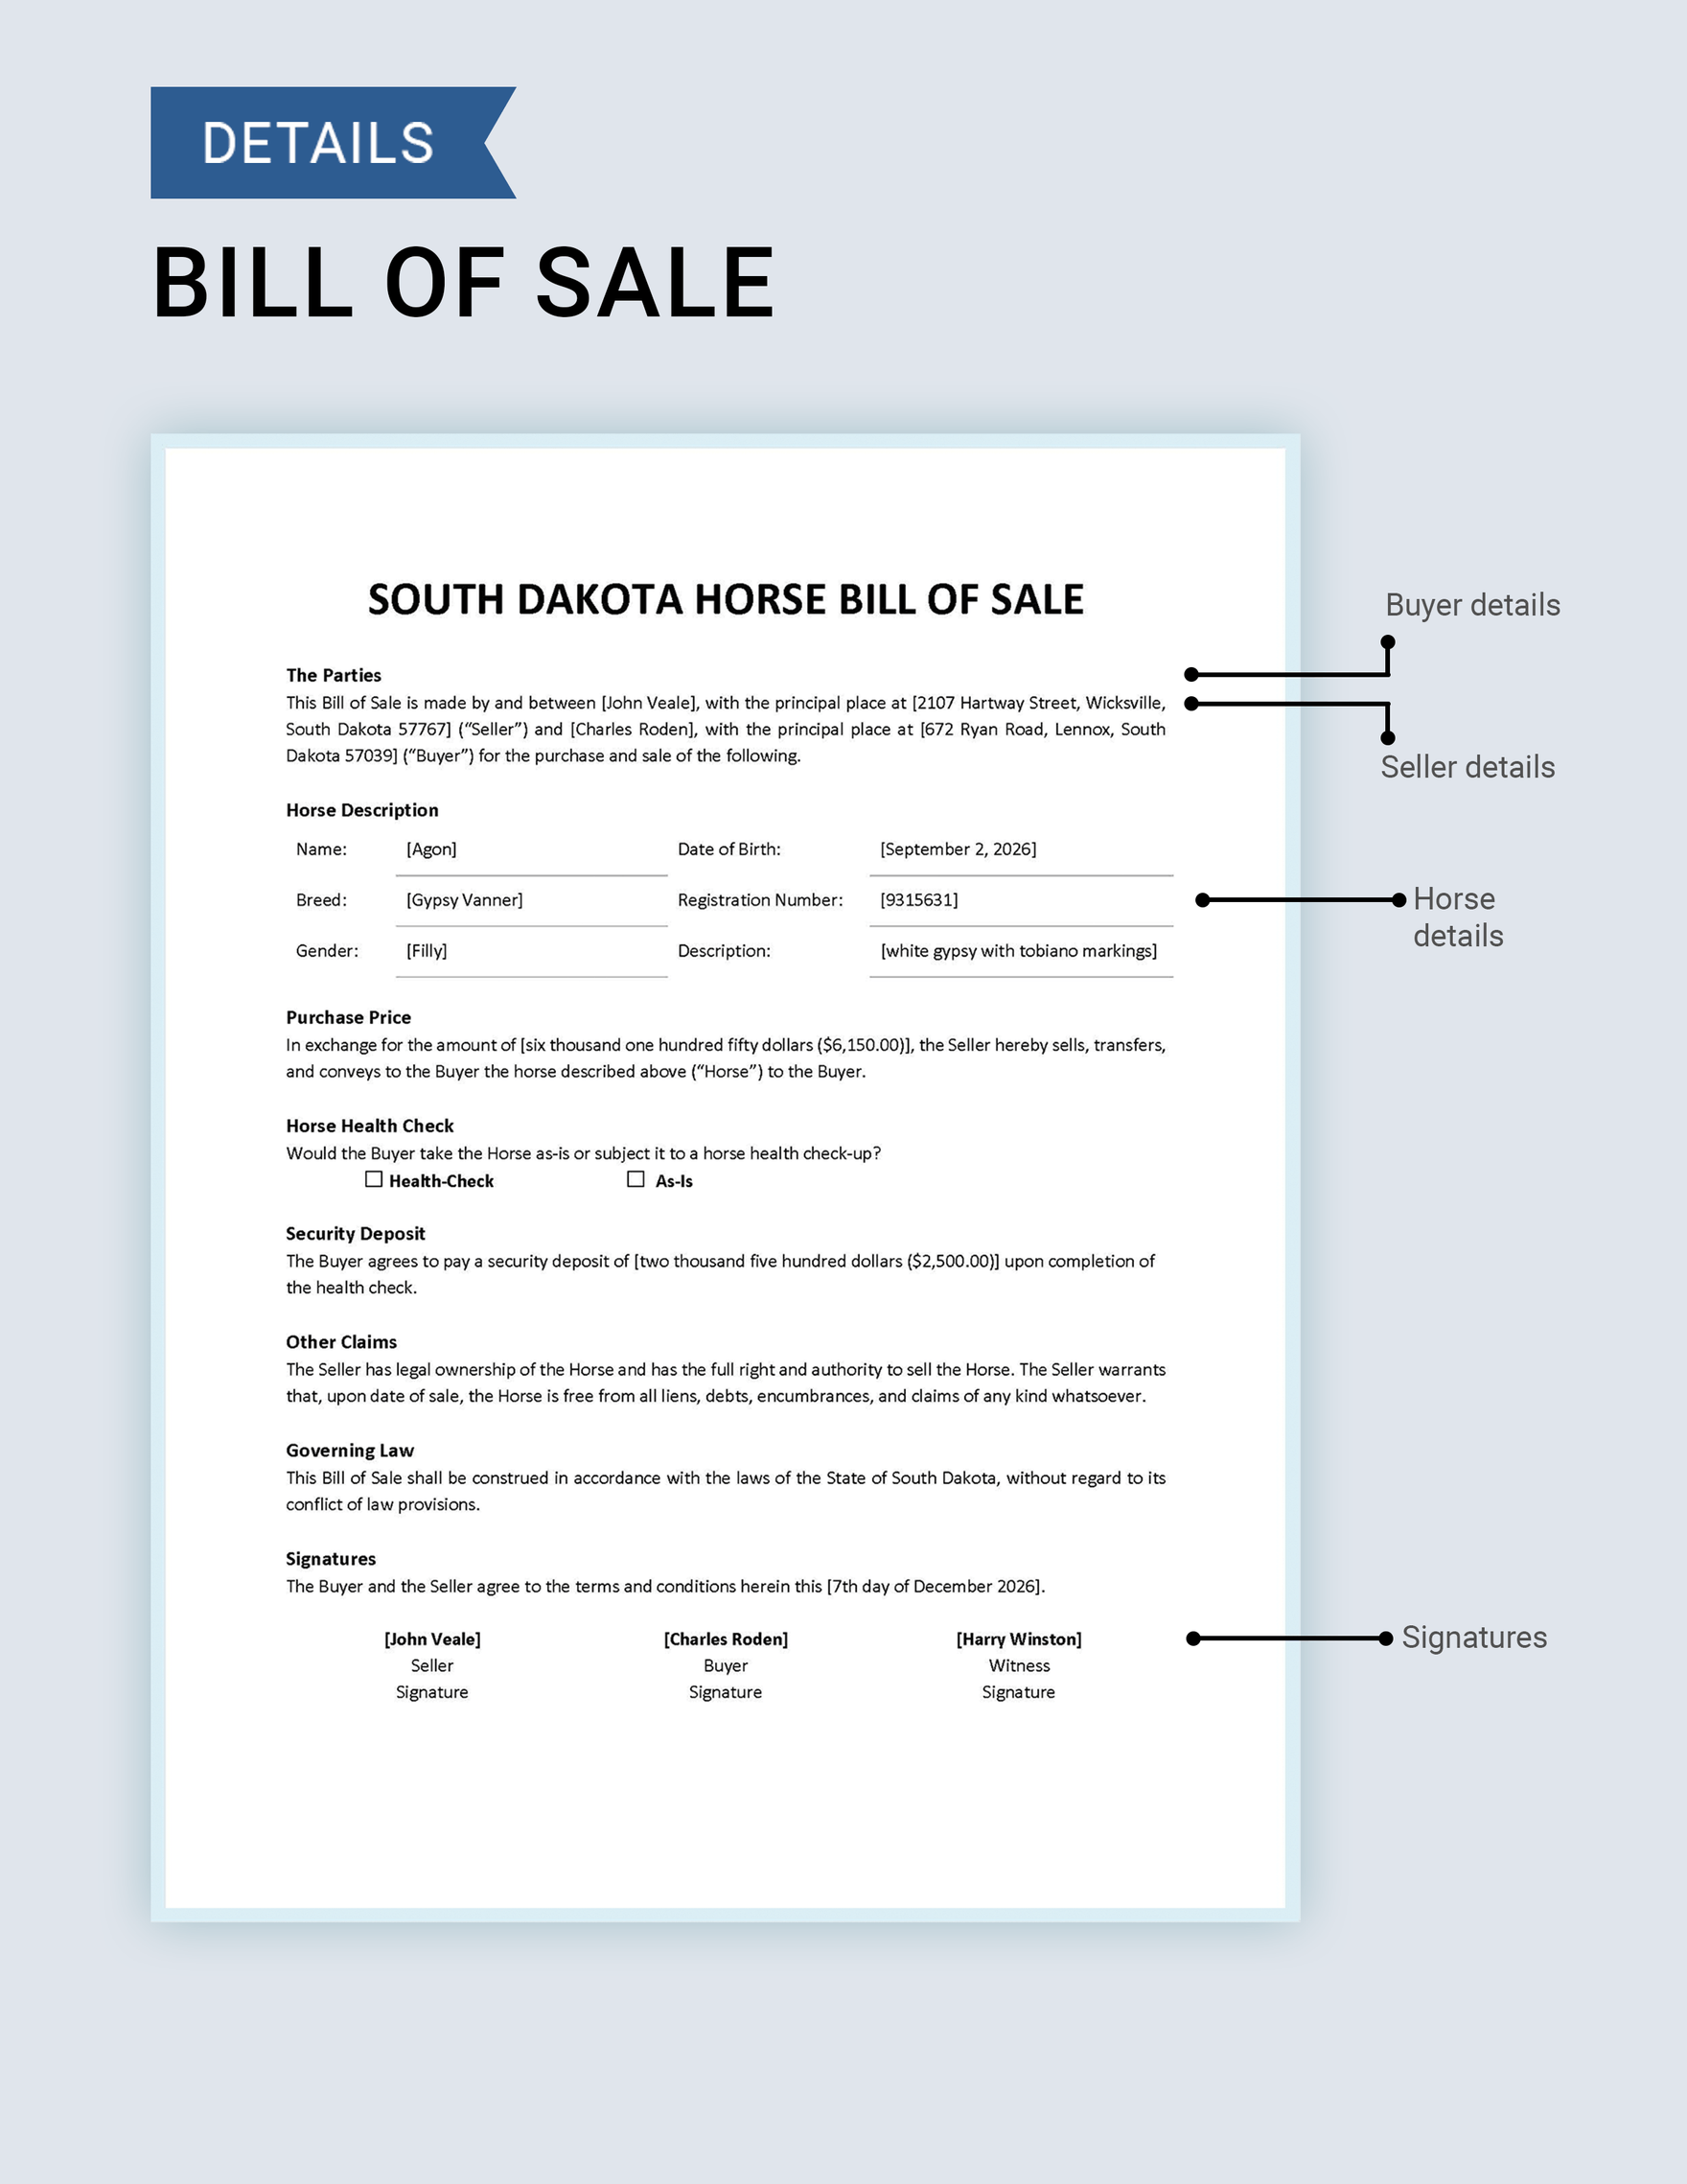 South Dakota Horse Bill of Sale Template